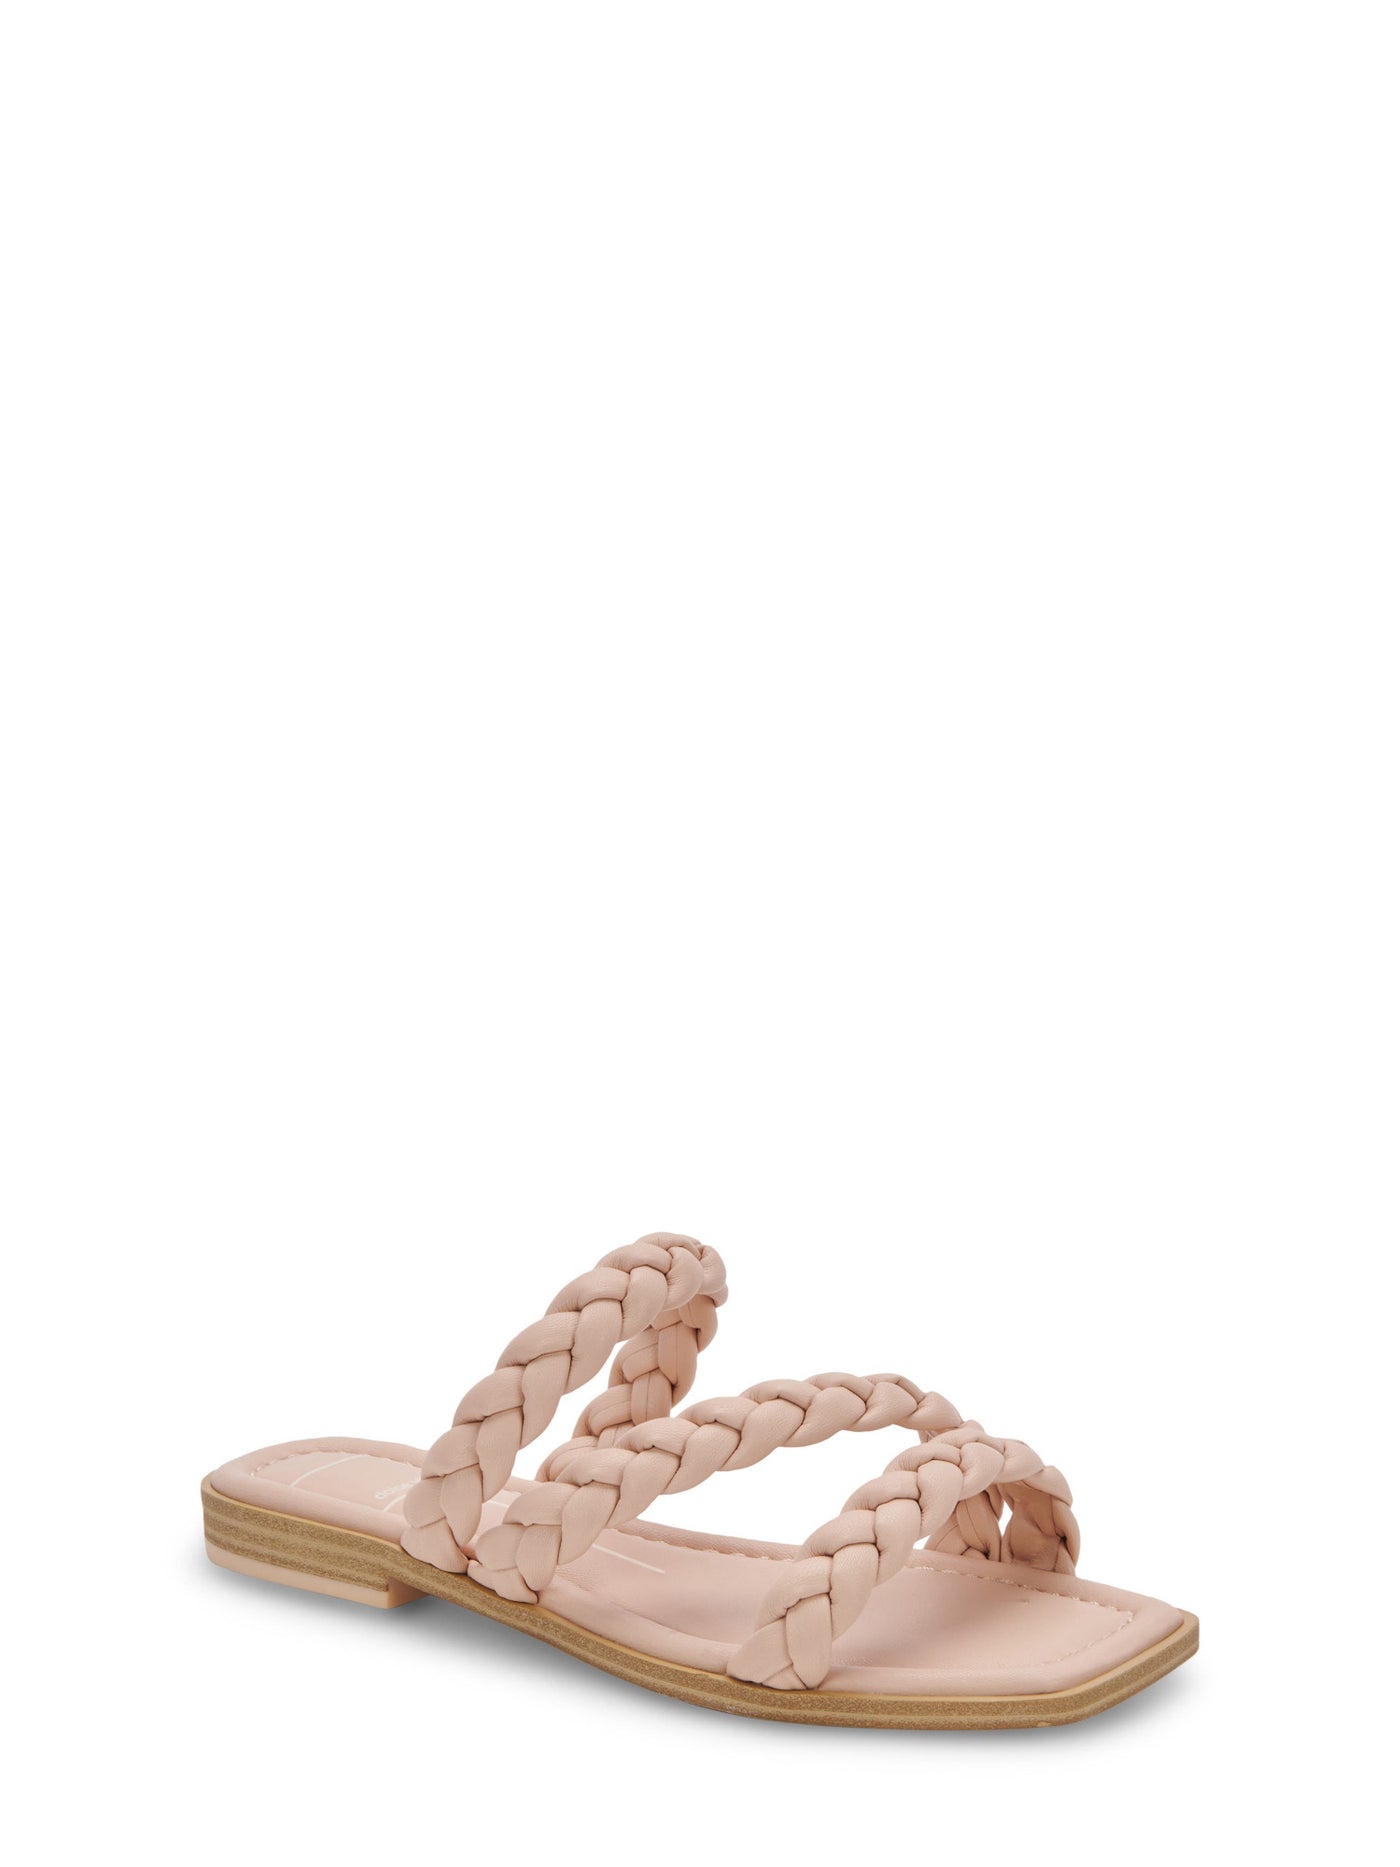 DOLCE VITA Womens Beige Asymmetrical Strap Braided Padded Iman Square Toe Slip On Slide Sandals Shoes 6